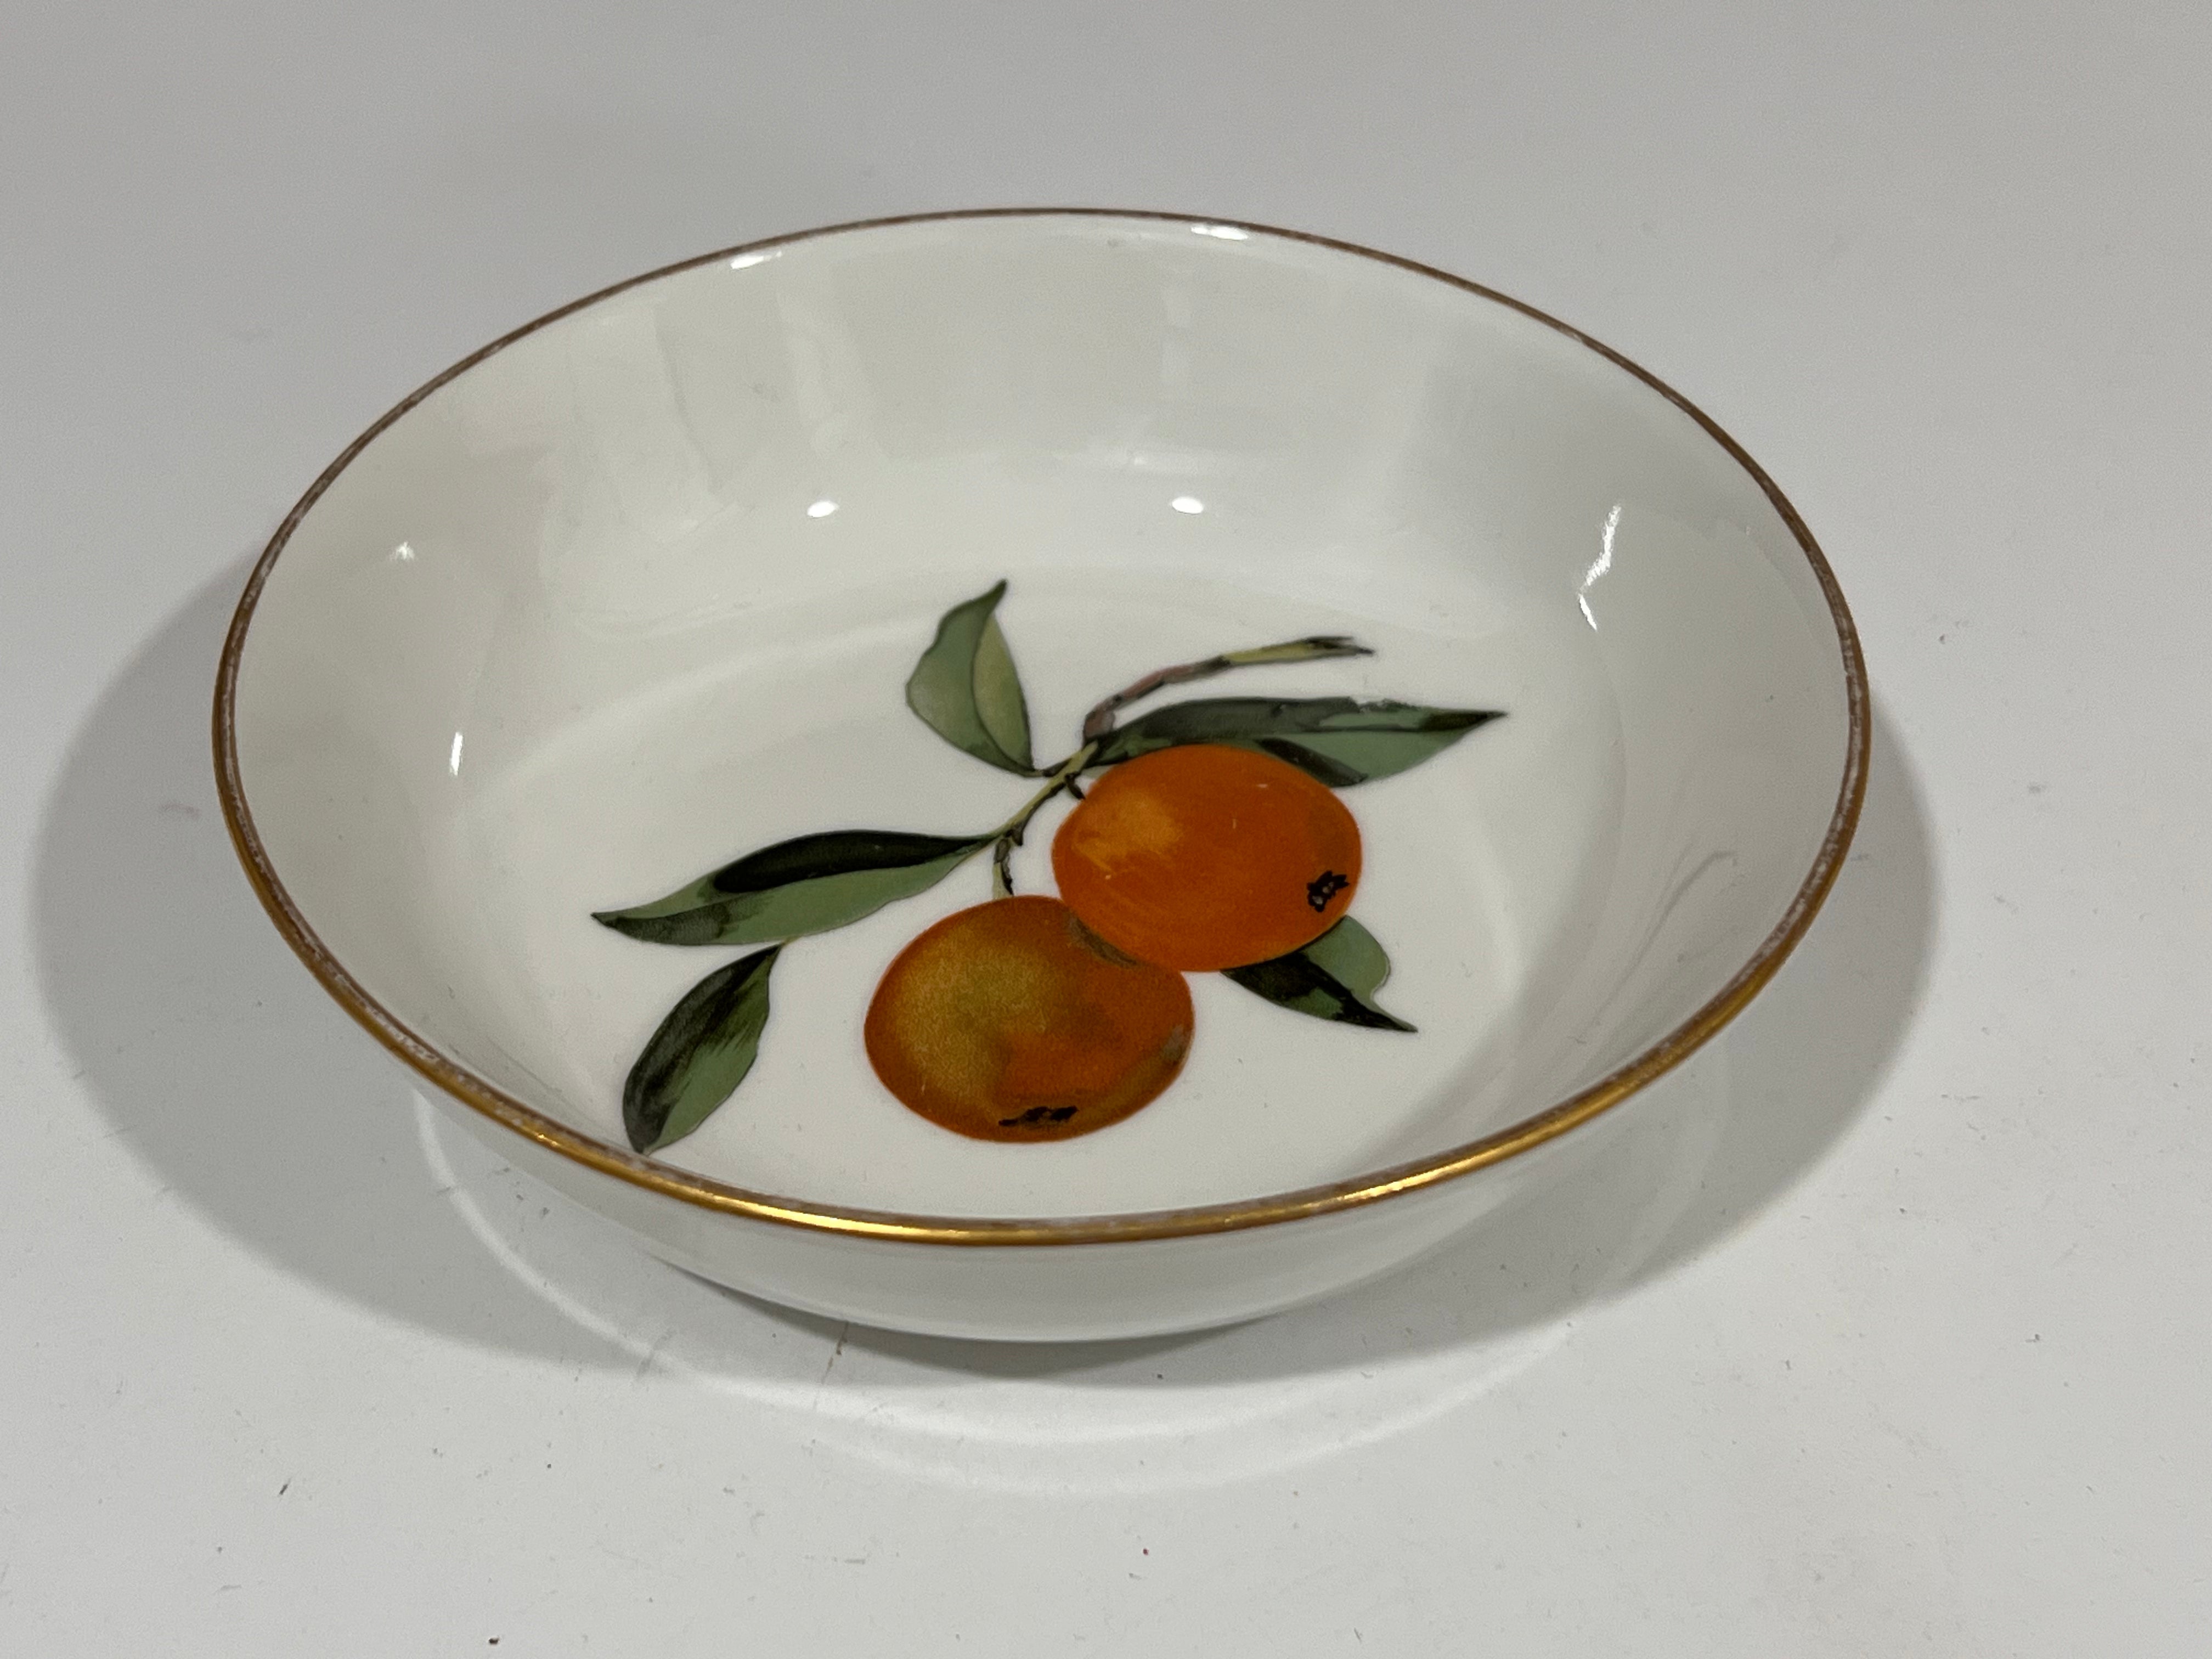 Royal Worchester Evesham Original Porcelain Fine China - Condiment bowl - Gold Trim - From England